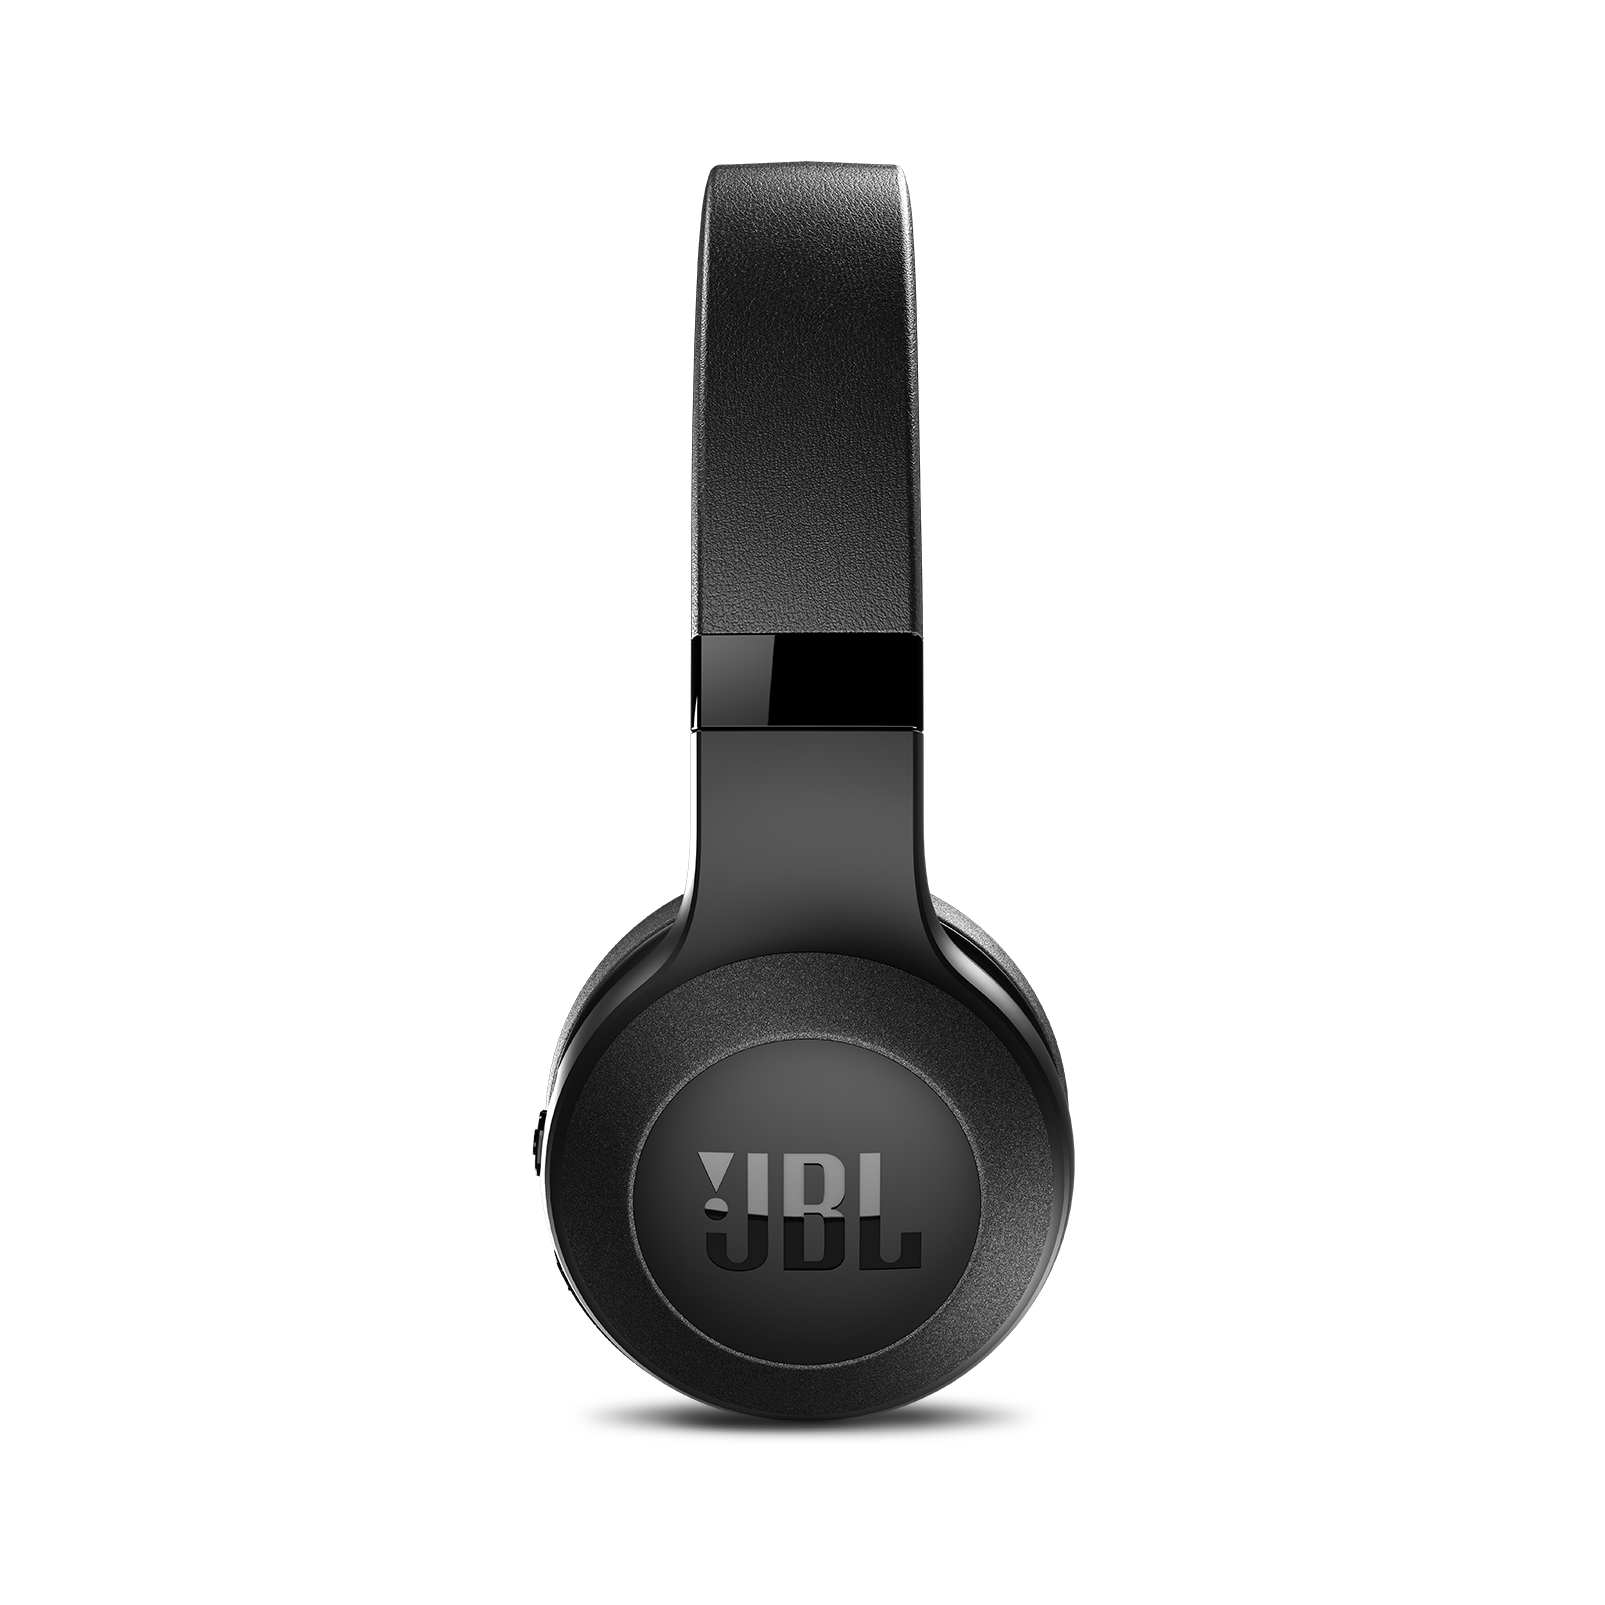 C45BT - Black Matte - Wireless on-ear headphones - Detailshot 1